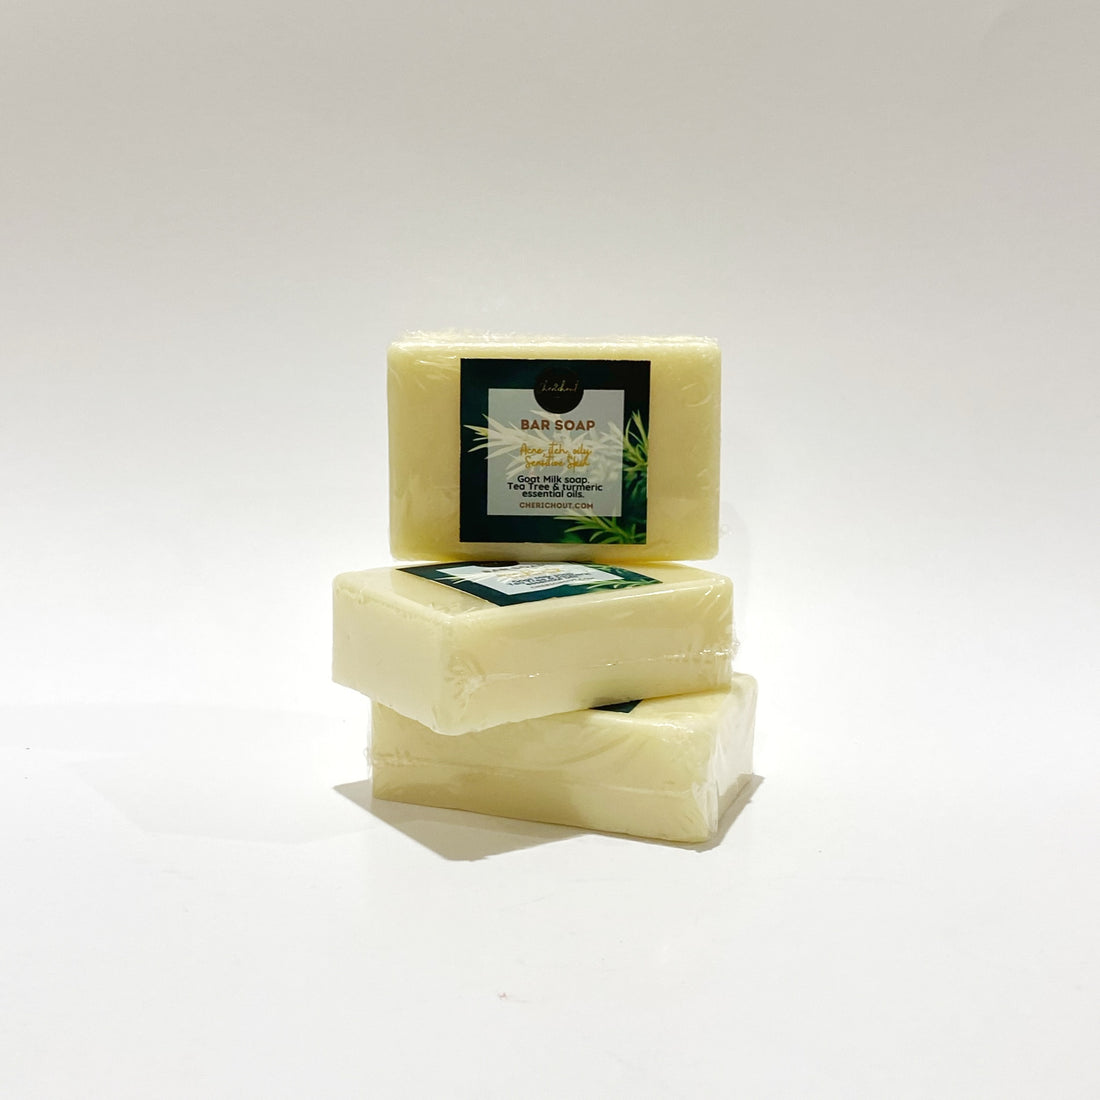 Sensitive skin bar soap